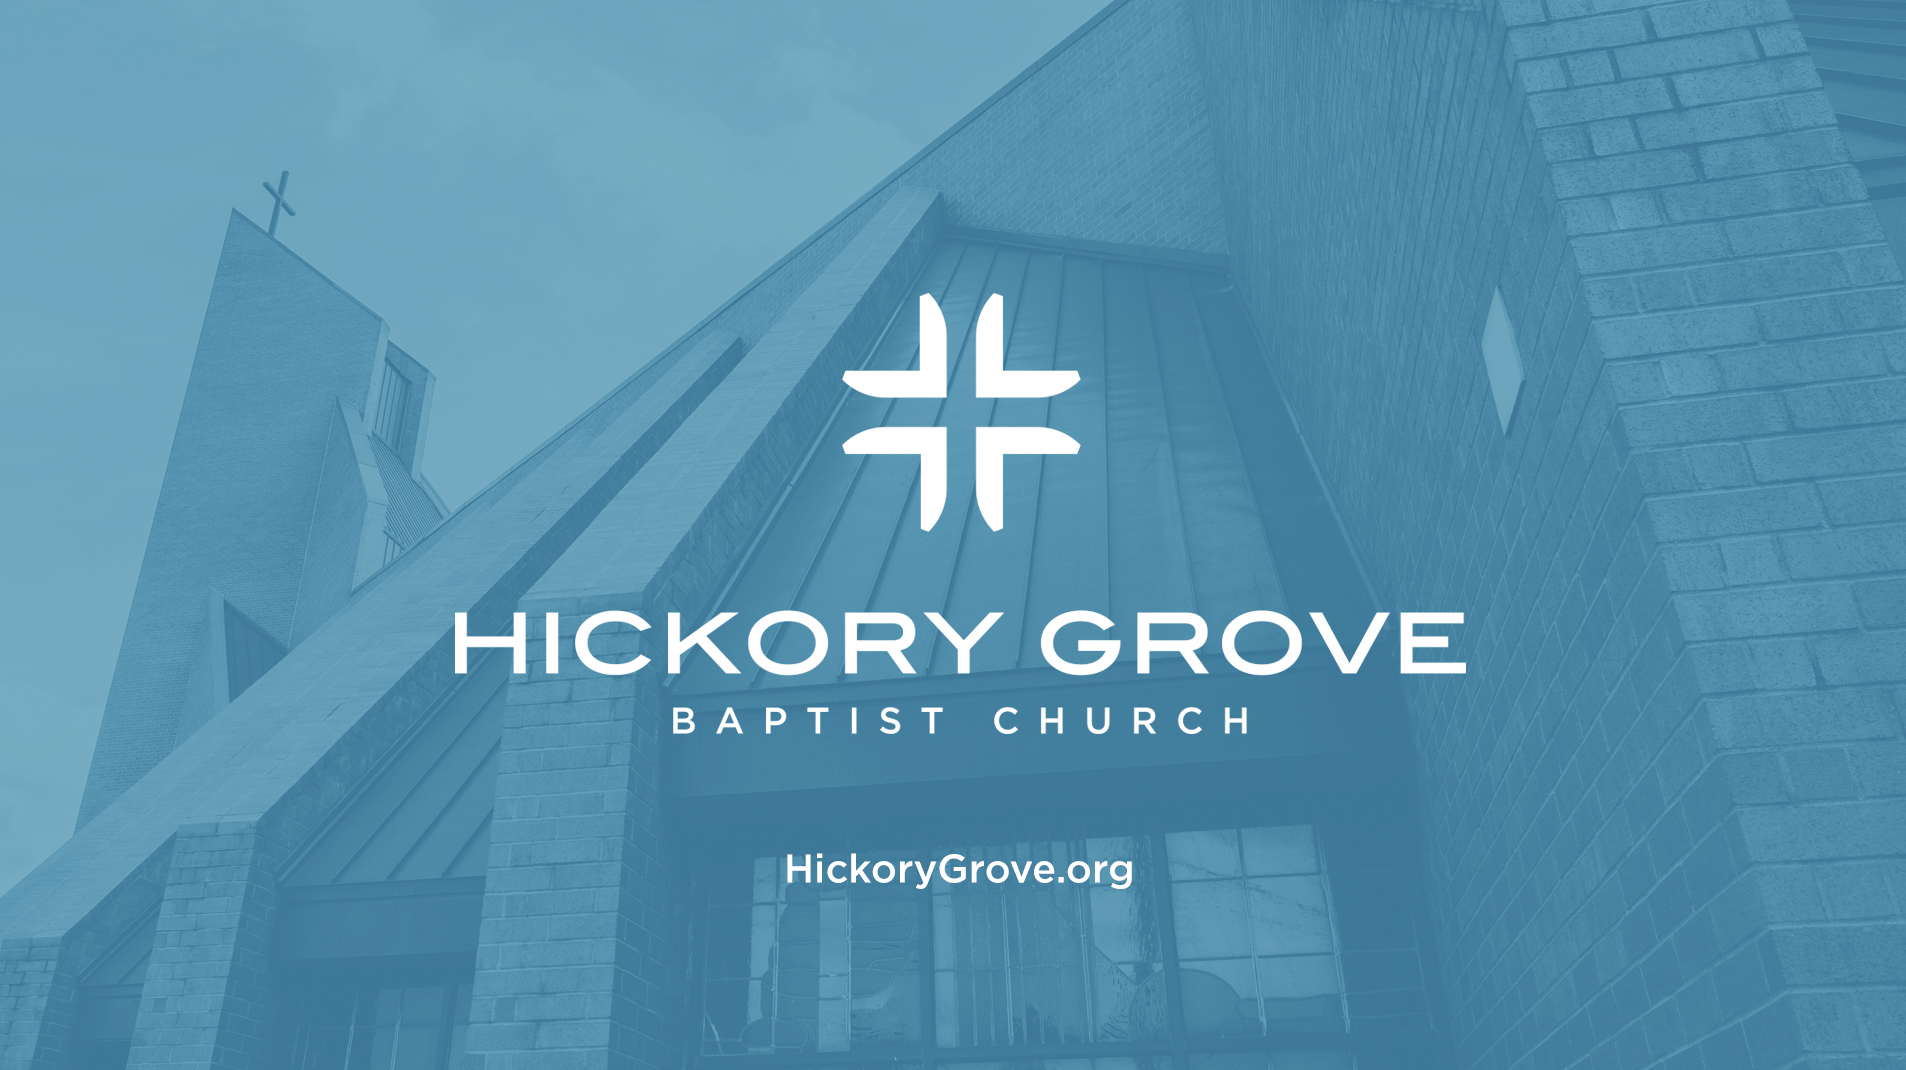 Hickory Grove, Harris Campus (Main) by Hickory Grove Baptist Church